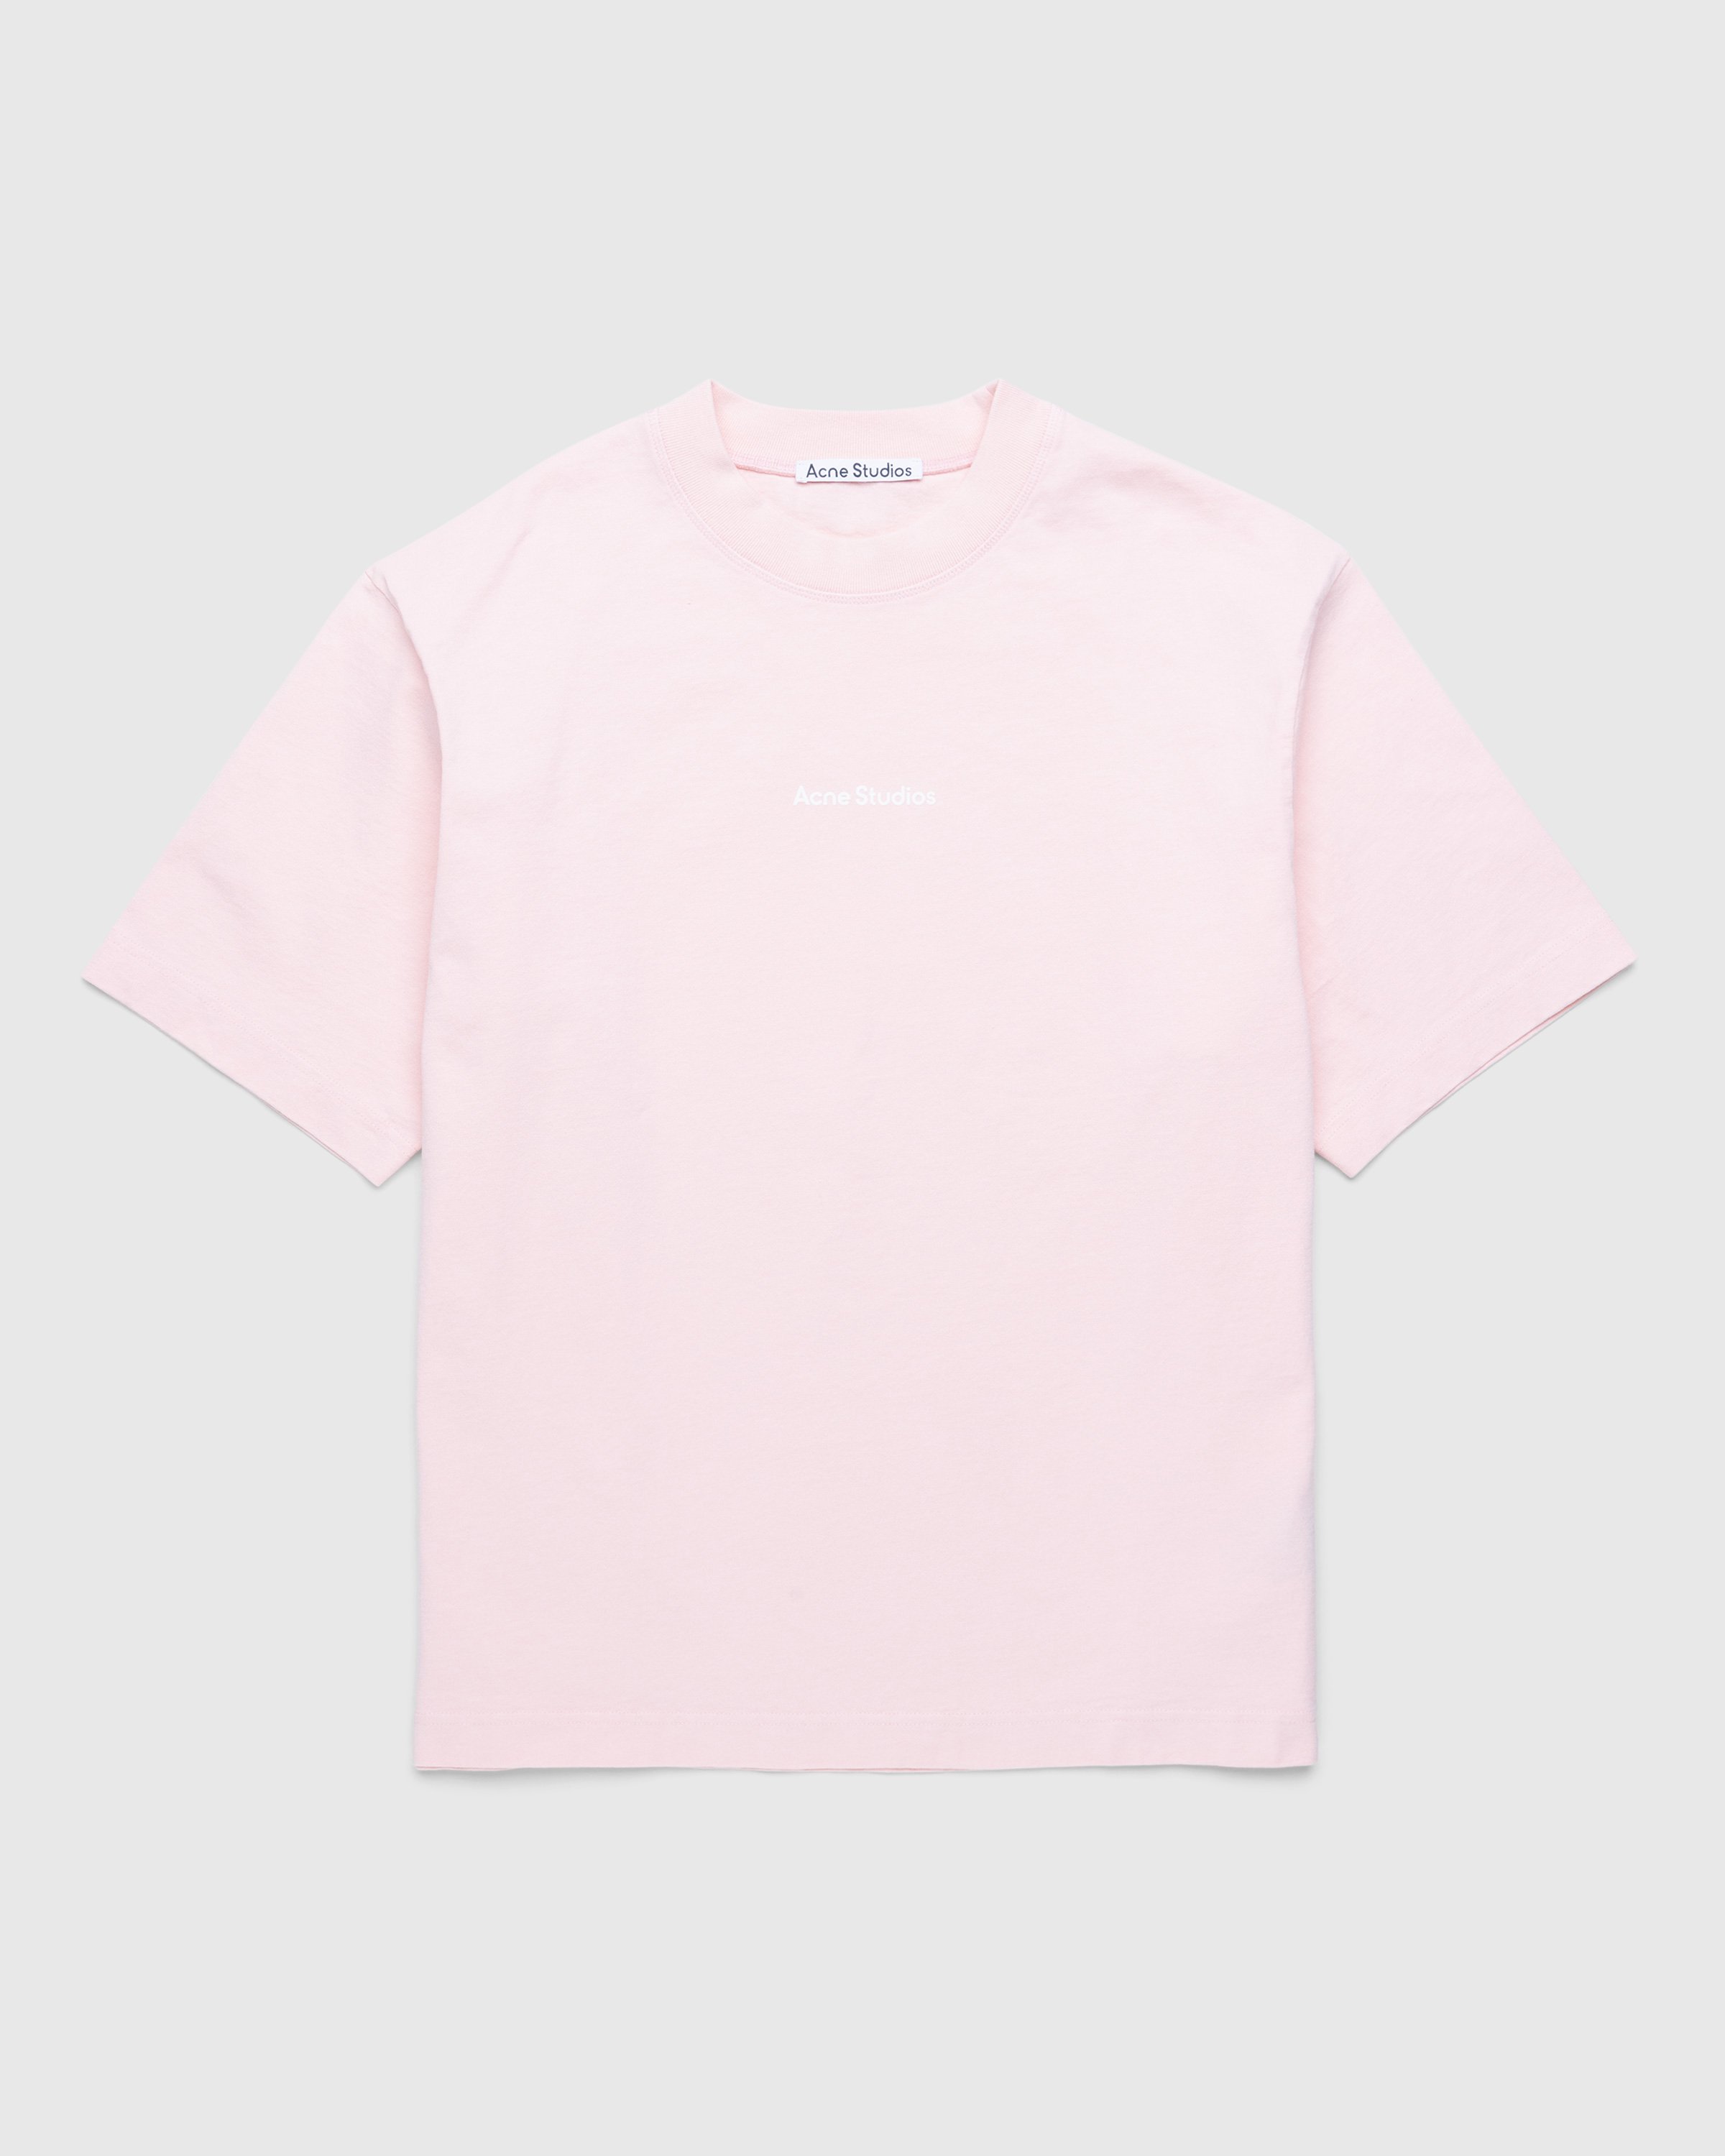 Acne Studios - Logo T-Shirt Pale Pink - Clothing - Pink - Image 1